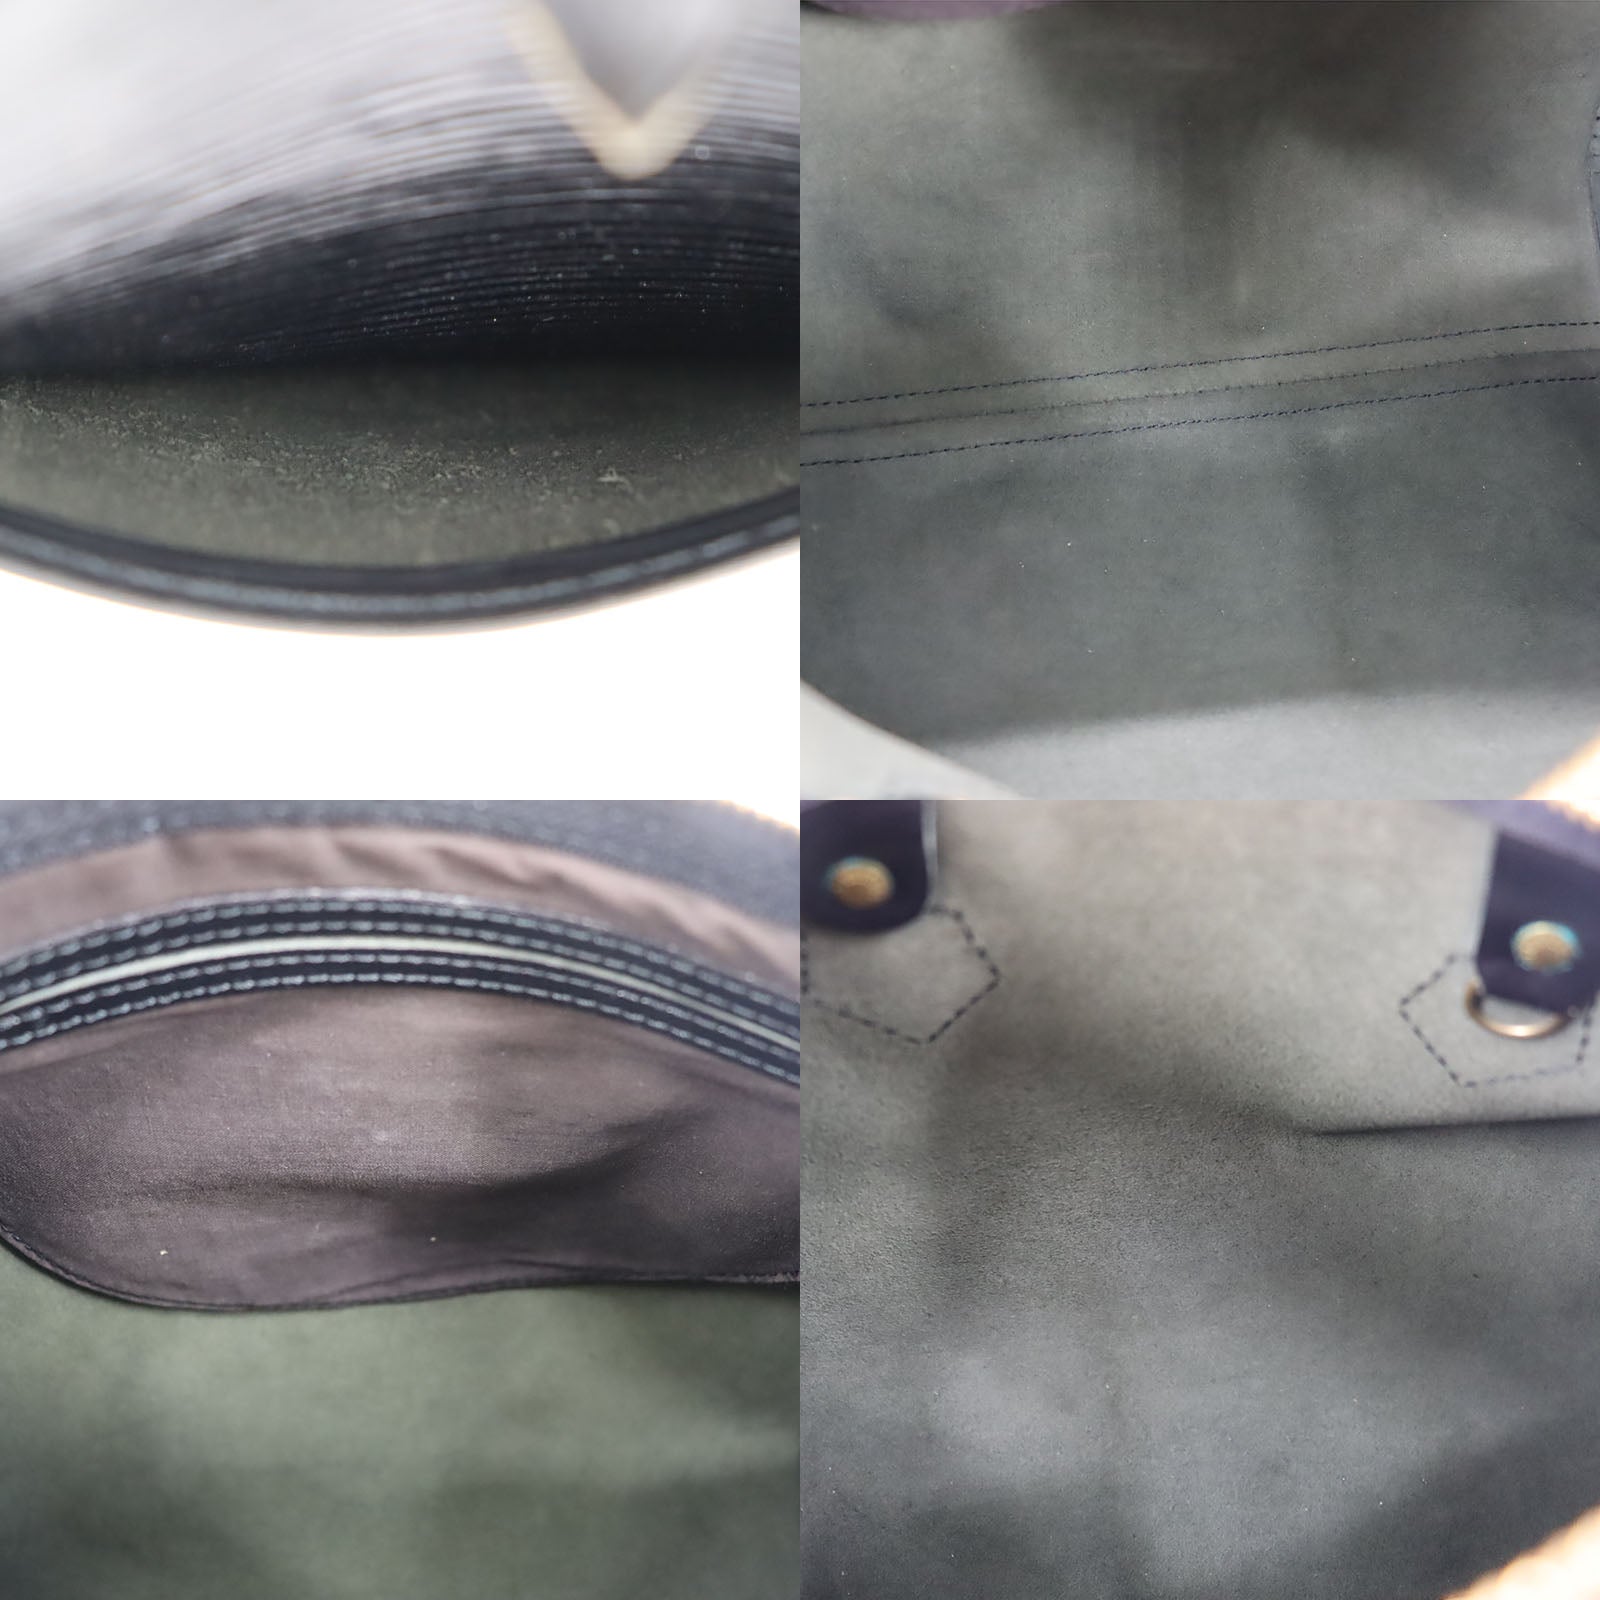 LOUIS VUITTON Speedy 25 Used Handbag Epi Leather Black M59032 Vintage –  VINTAGE MODE JP